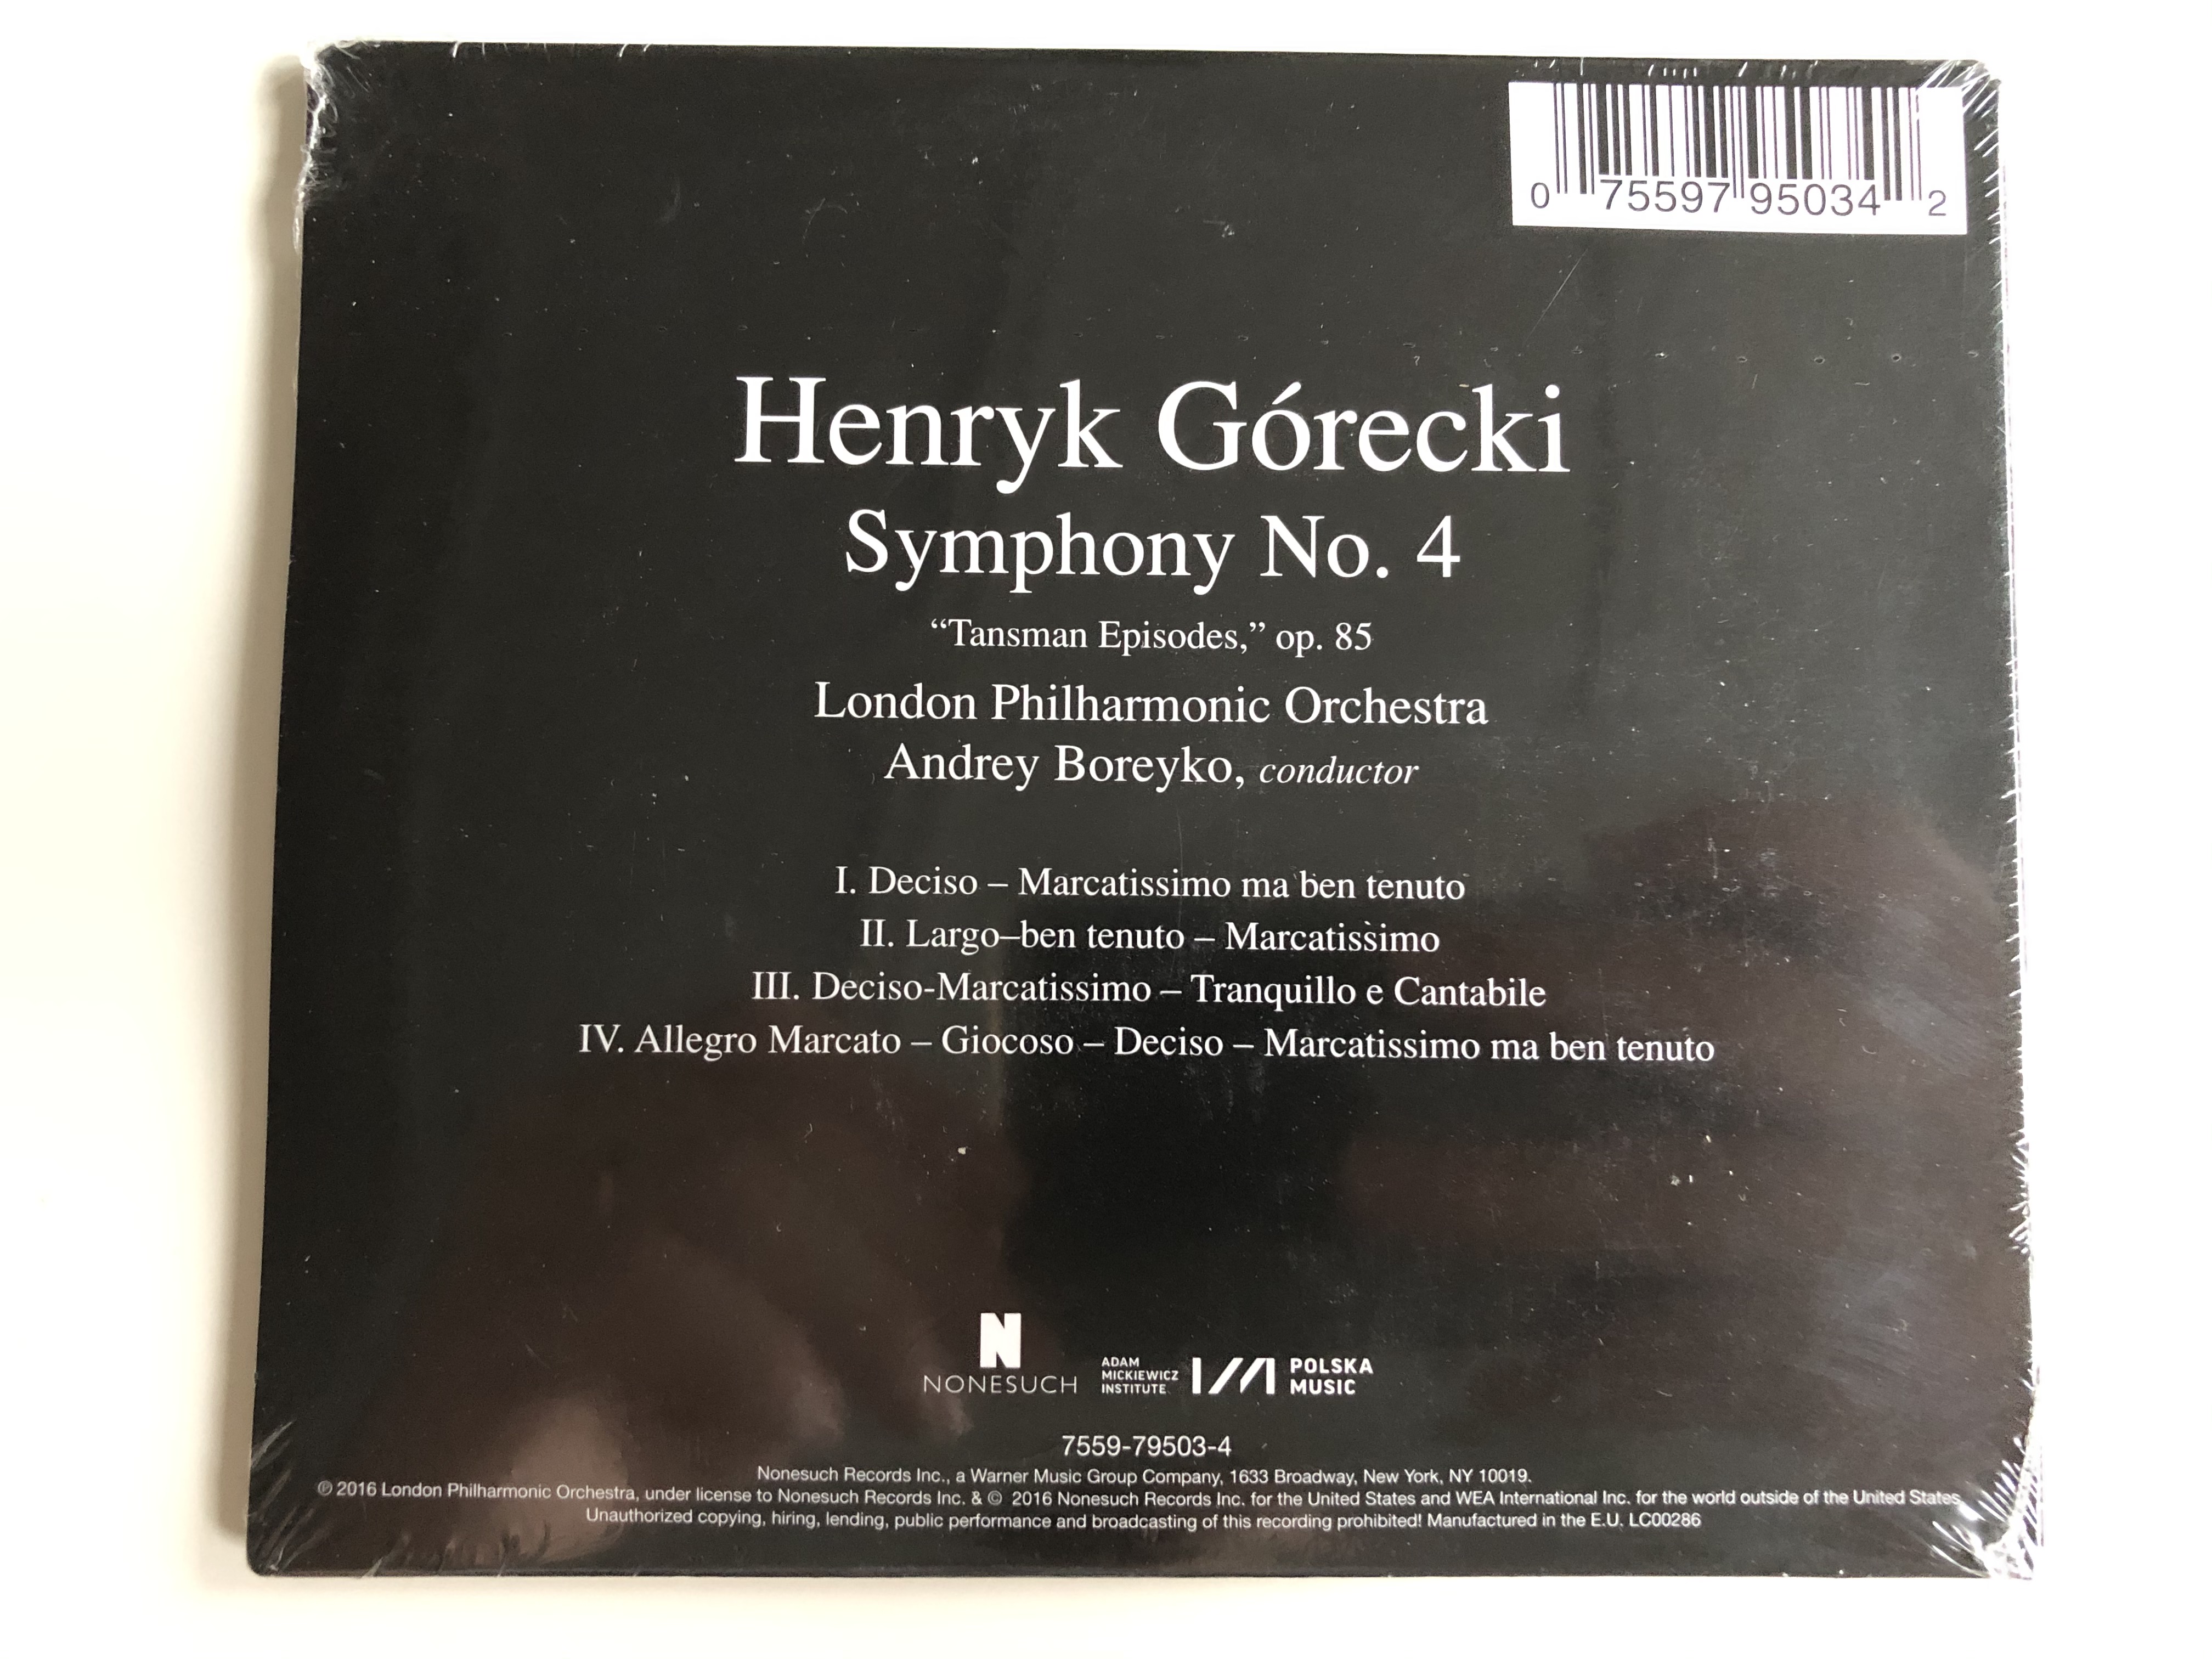 henryk-g-recki-symphony-no.-4-tansman-episodes-london-philharmonic-orchestra-andrey-boreyko-conductor-nonesuch-audio-cd-2016-7559-79503-4-2-.jpg